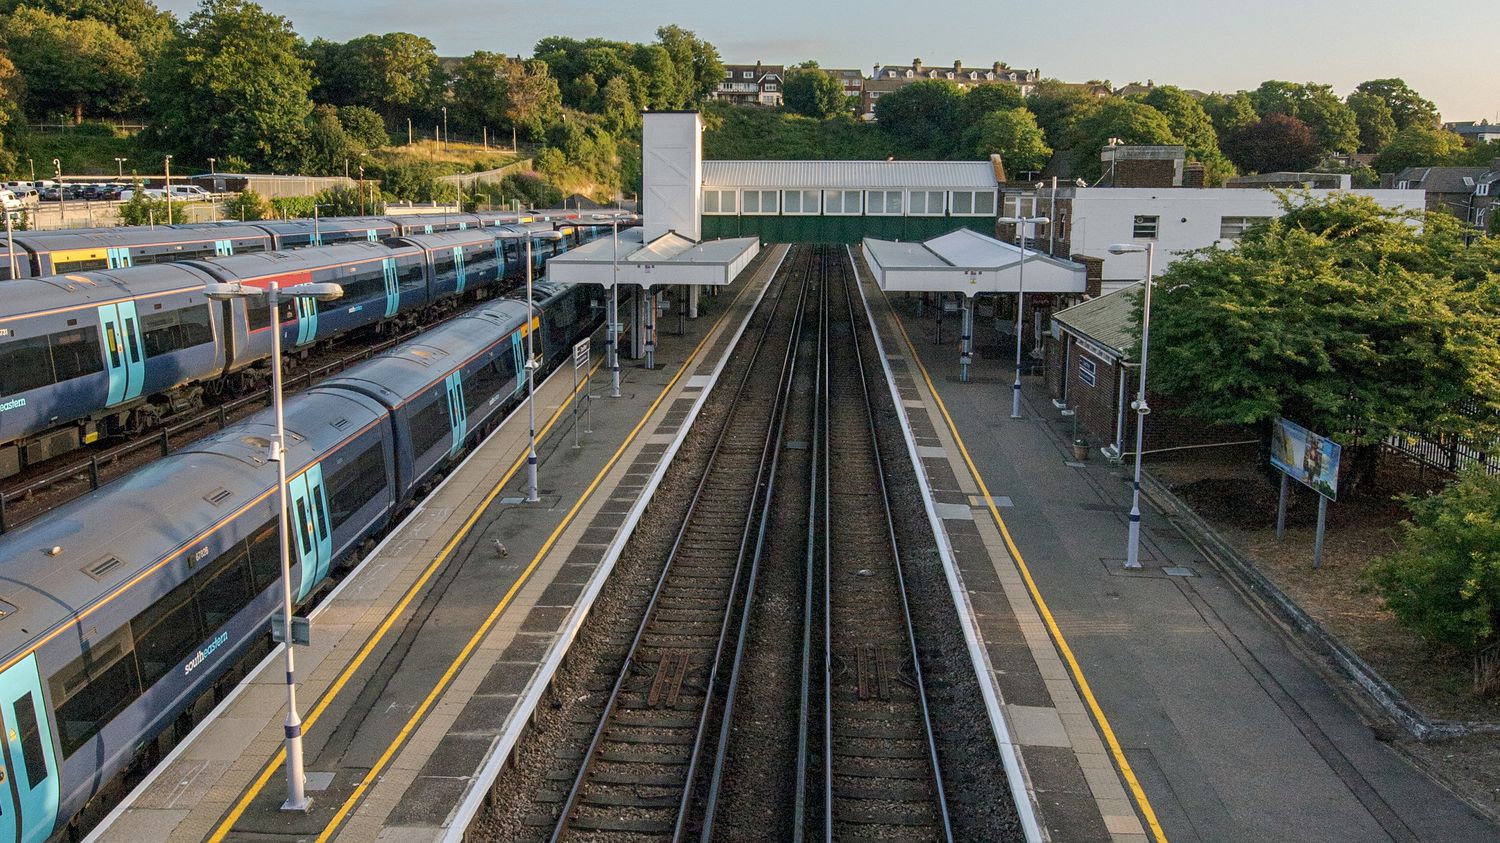 United Kingdom: a new strike by train drivers affects rail traffic
